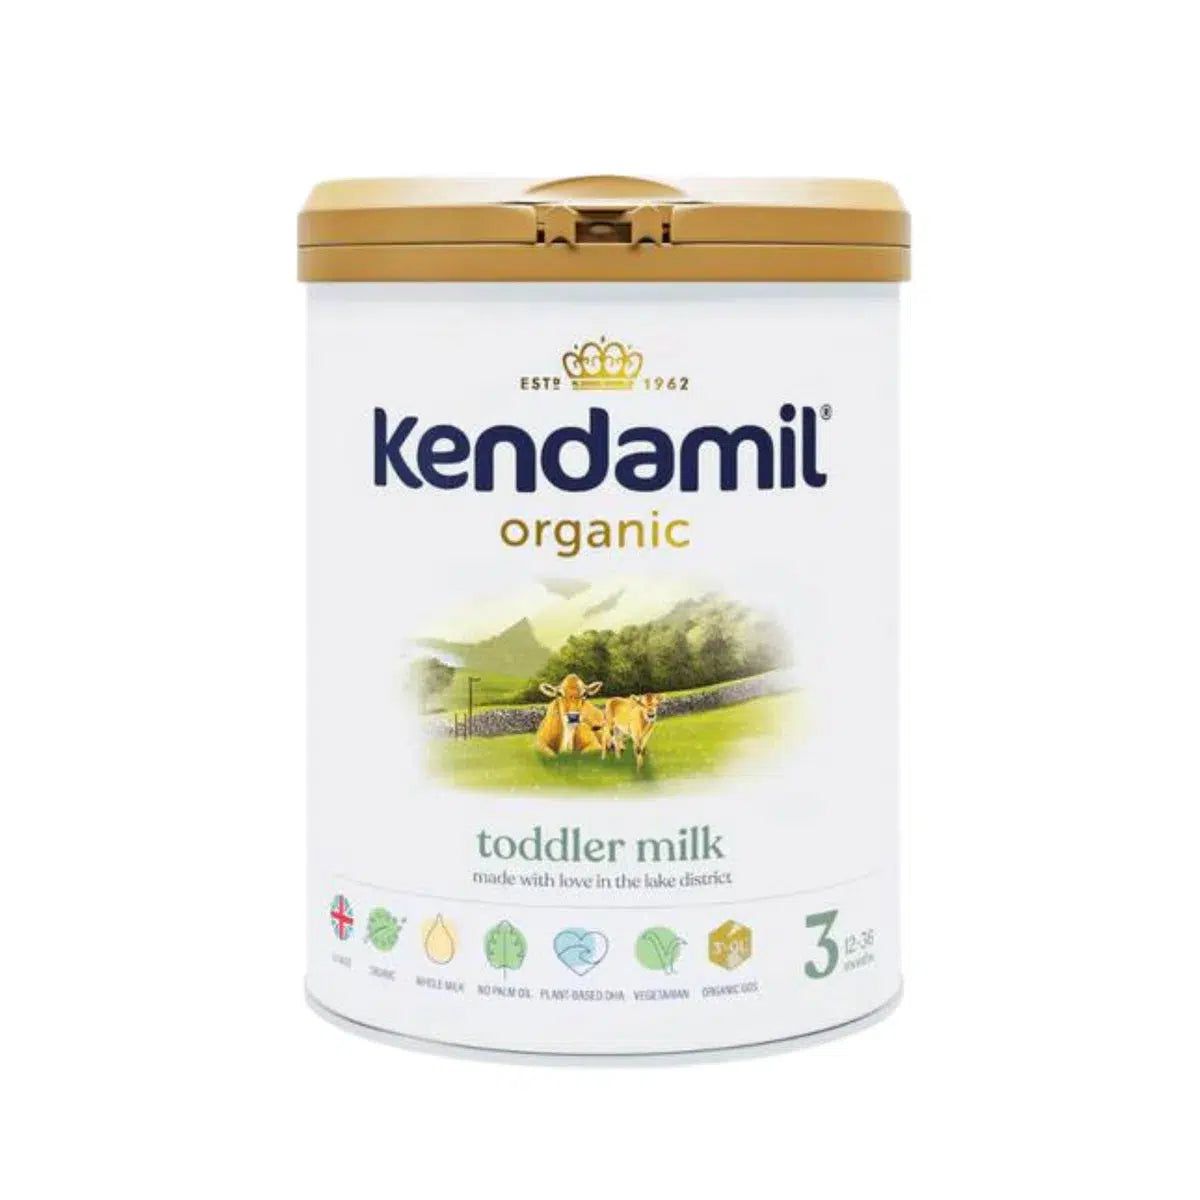 Kendamil Stage 3 (12+ Months) Organic Milk Formula (800g)